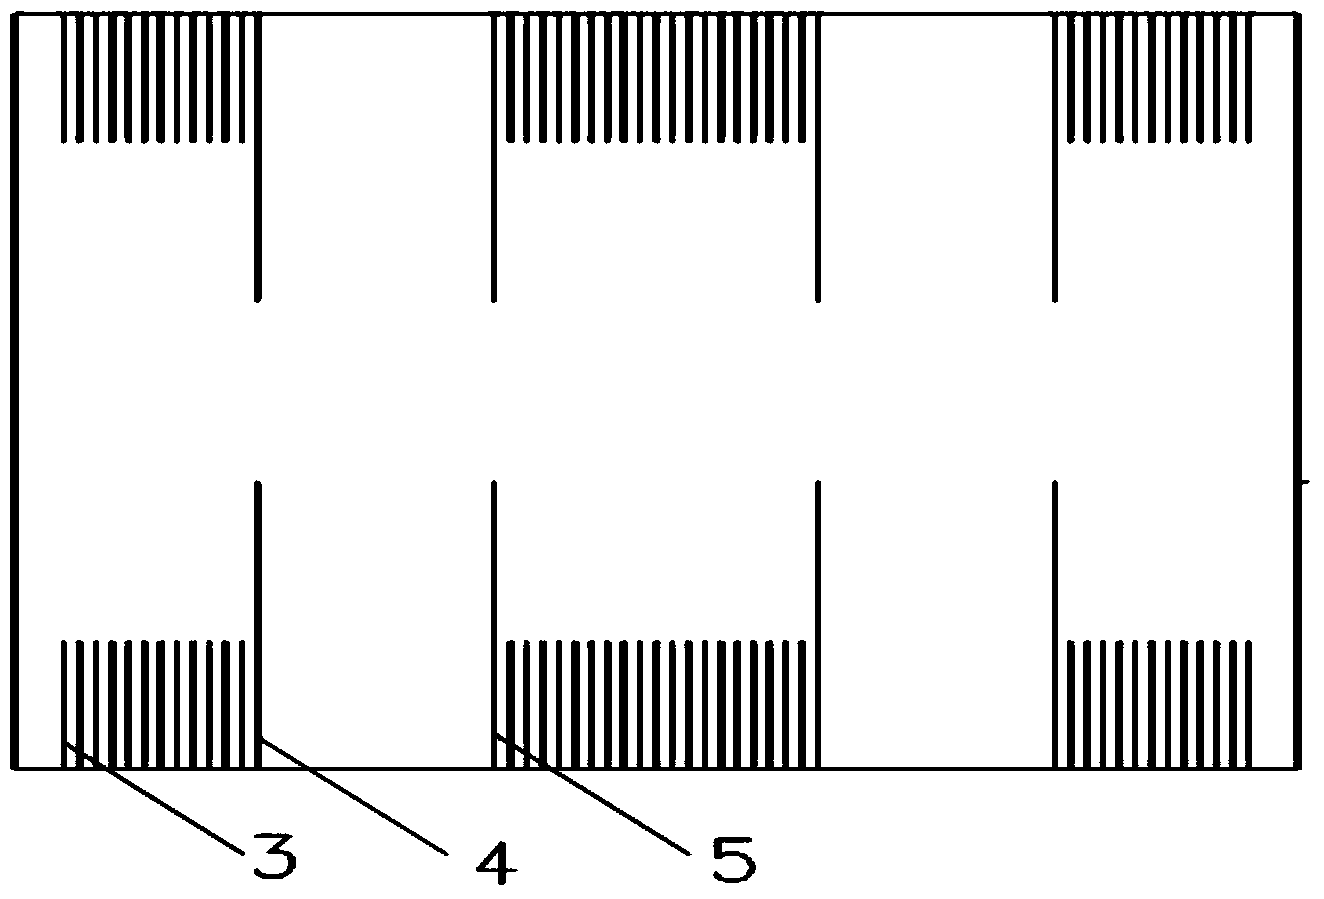 Incremental bending and forming method of hat-shaped member